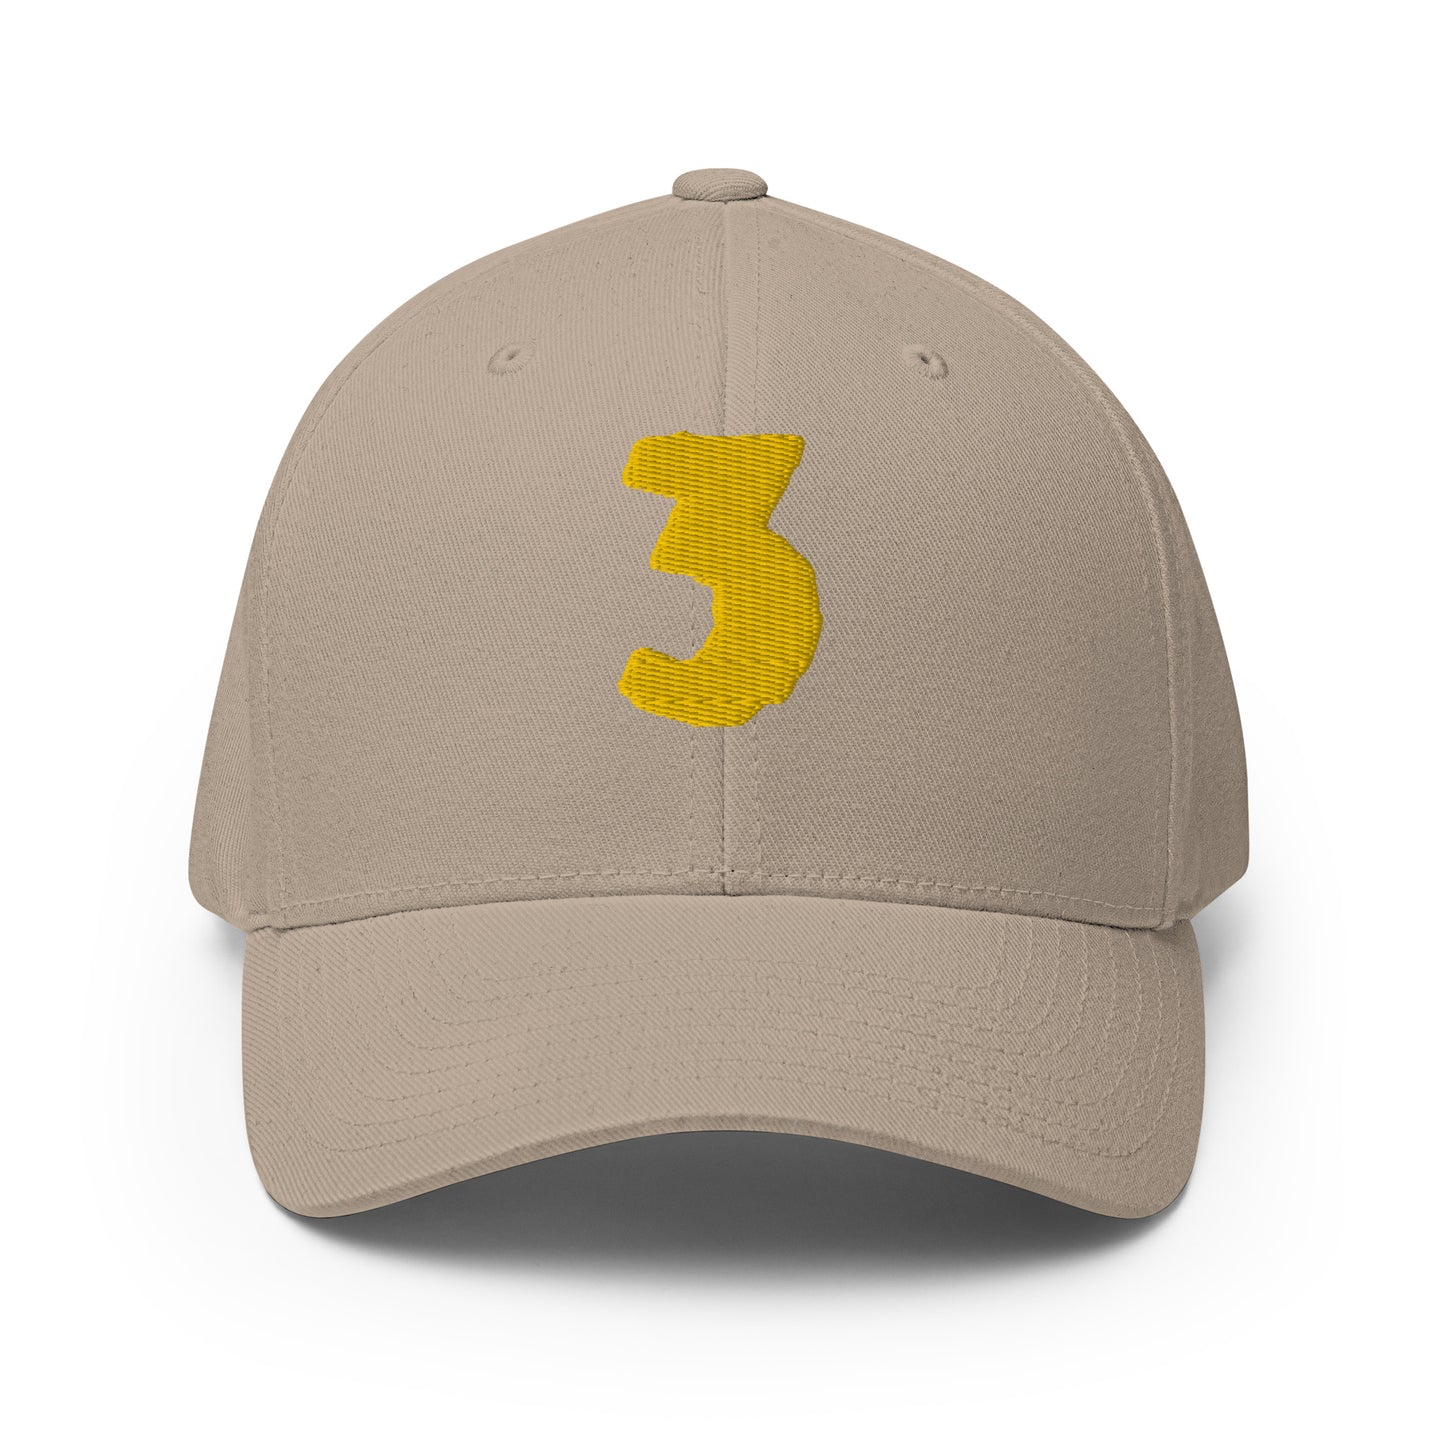 Baseball Cap with Number 3 Three Symbol